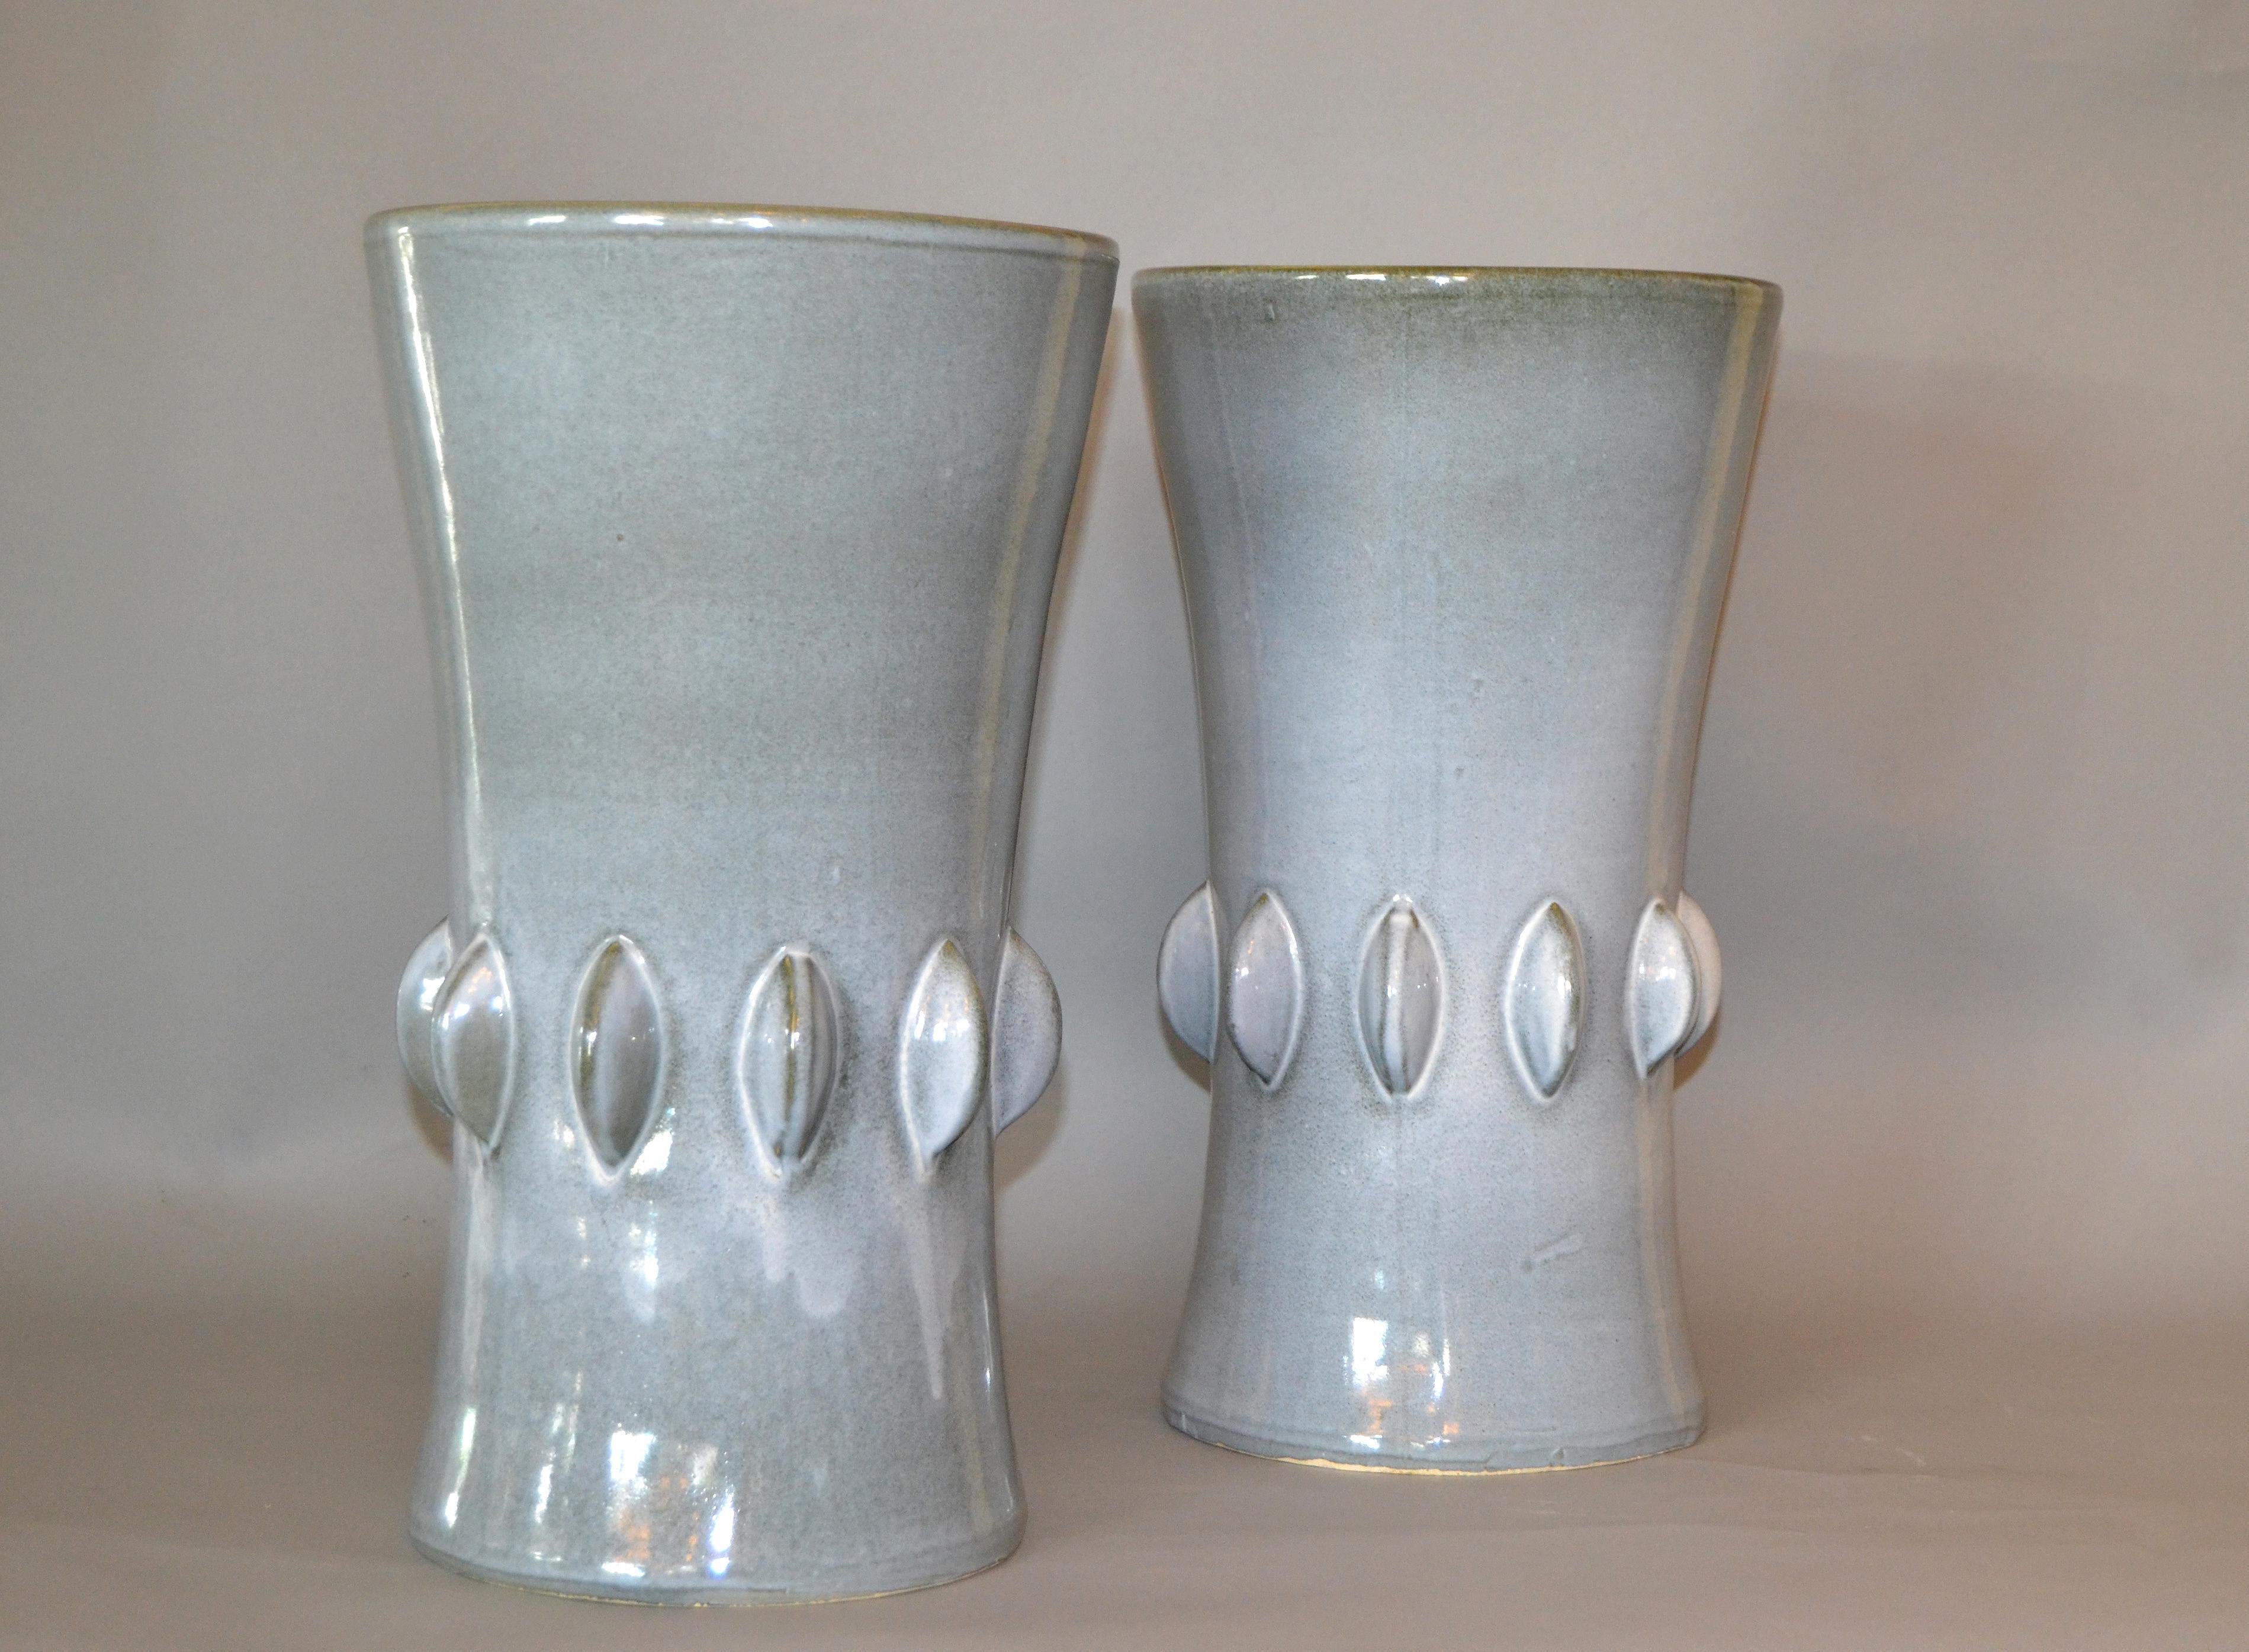 A pair of Mid-Century Modern ceramic vases in light gray dripping glaze.
 